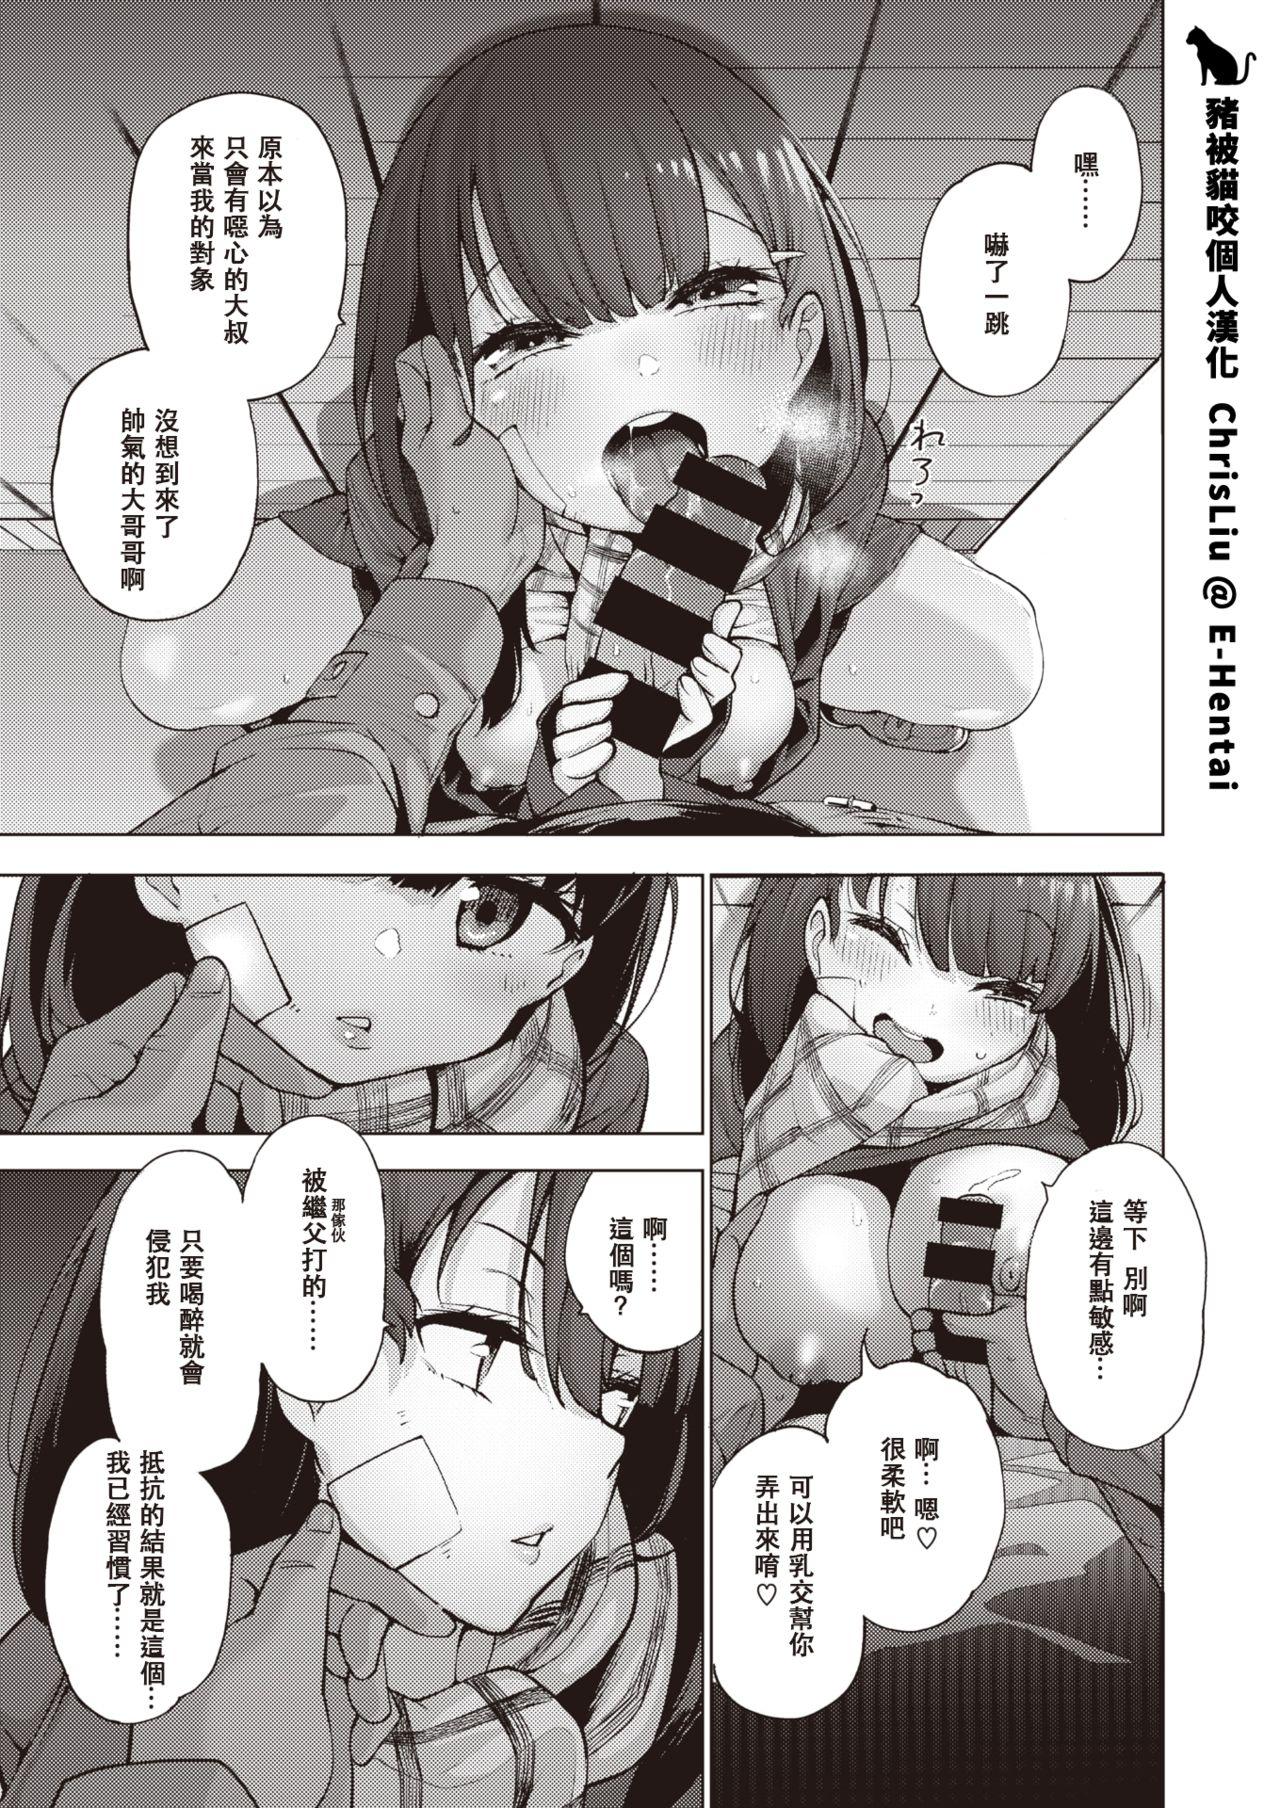 POV Kamimachi Shoujo #3 Page 6 Of 23 hentai haven, POV Kamimachi Shoujo #3 ...